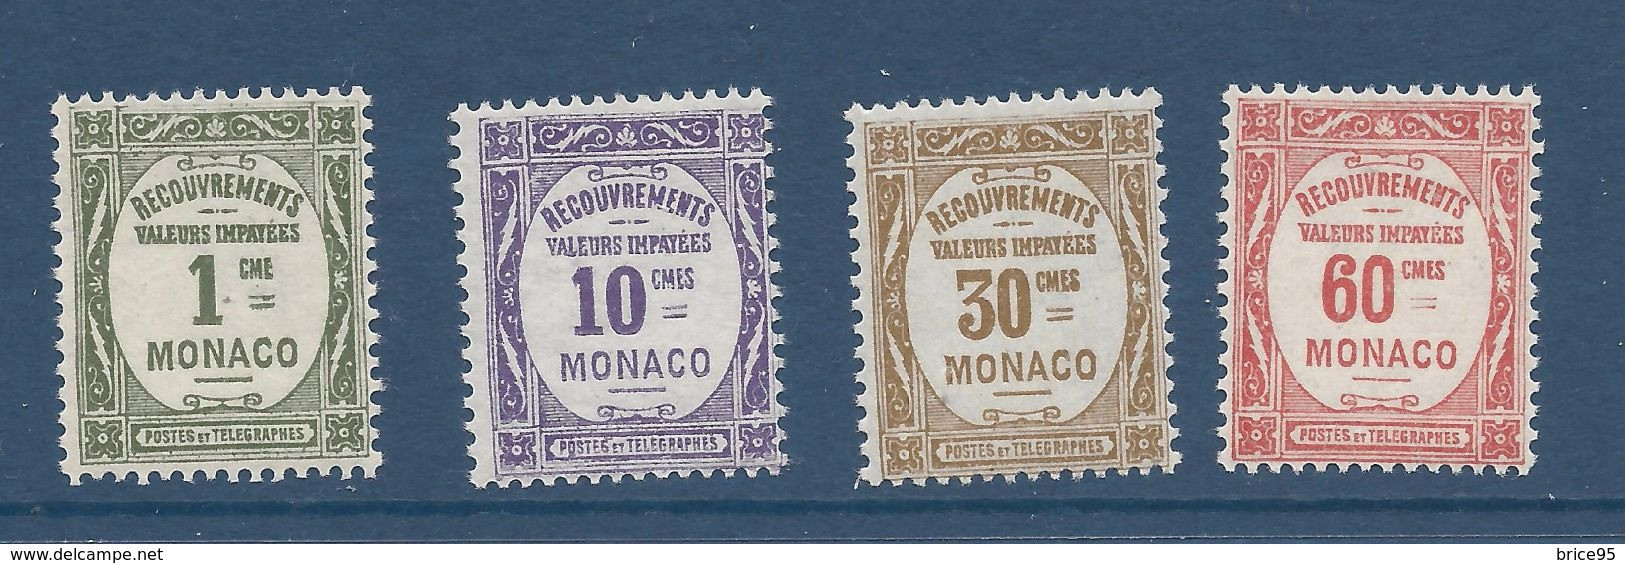 Monaco - Taxe - YT N° 13 à 16 * - Neuf Avec Charnière - 1924 à 1932 - Ongebruikt